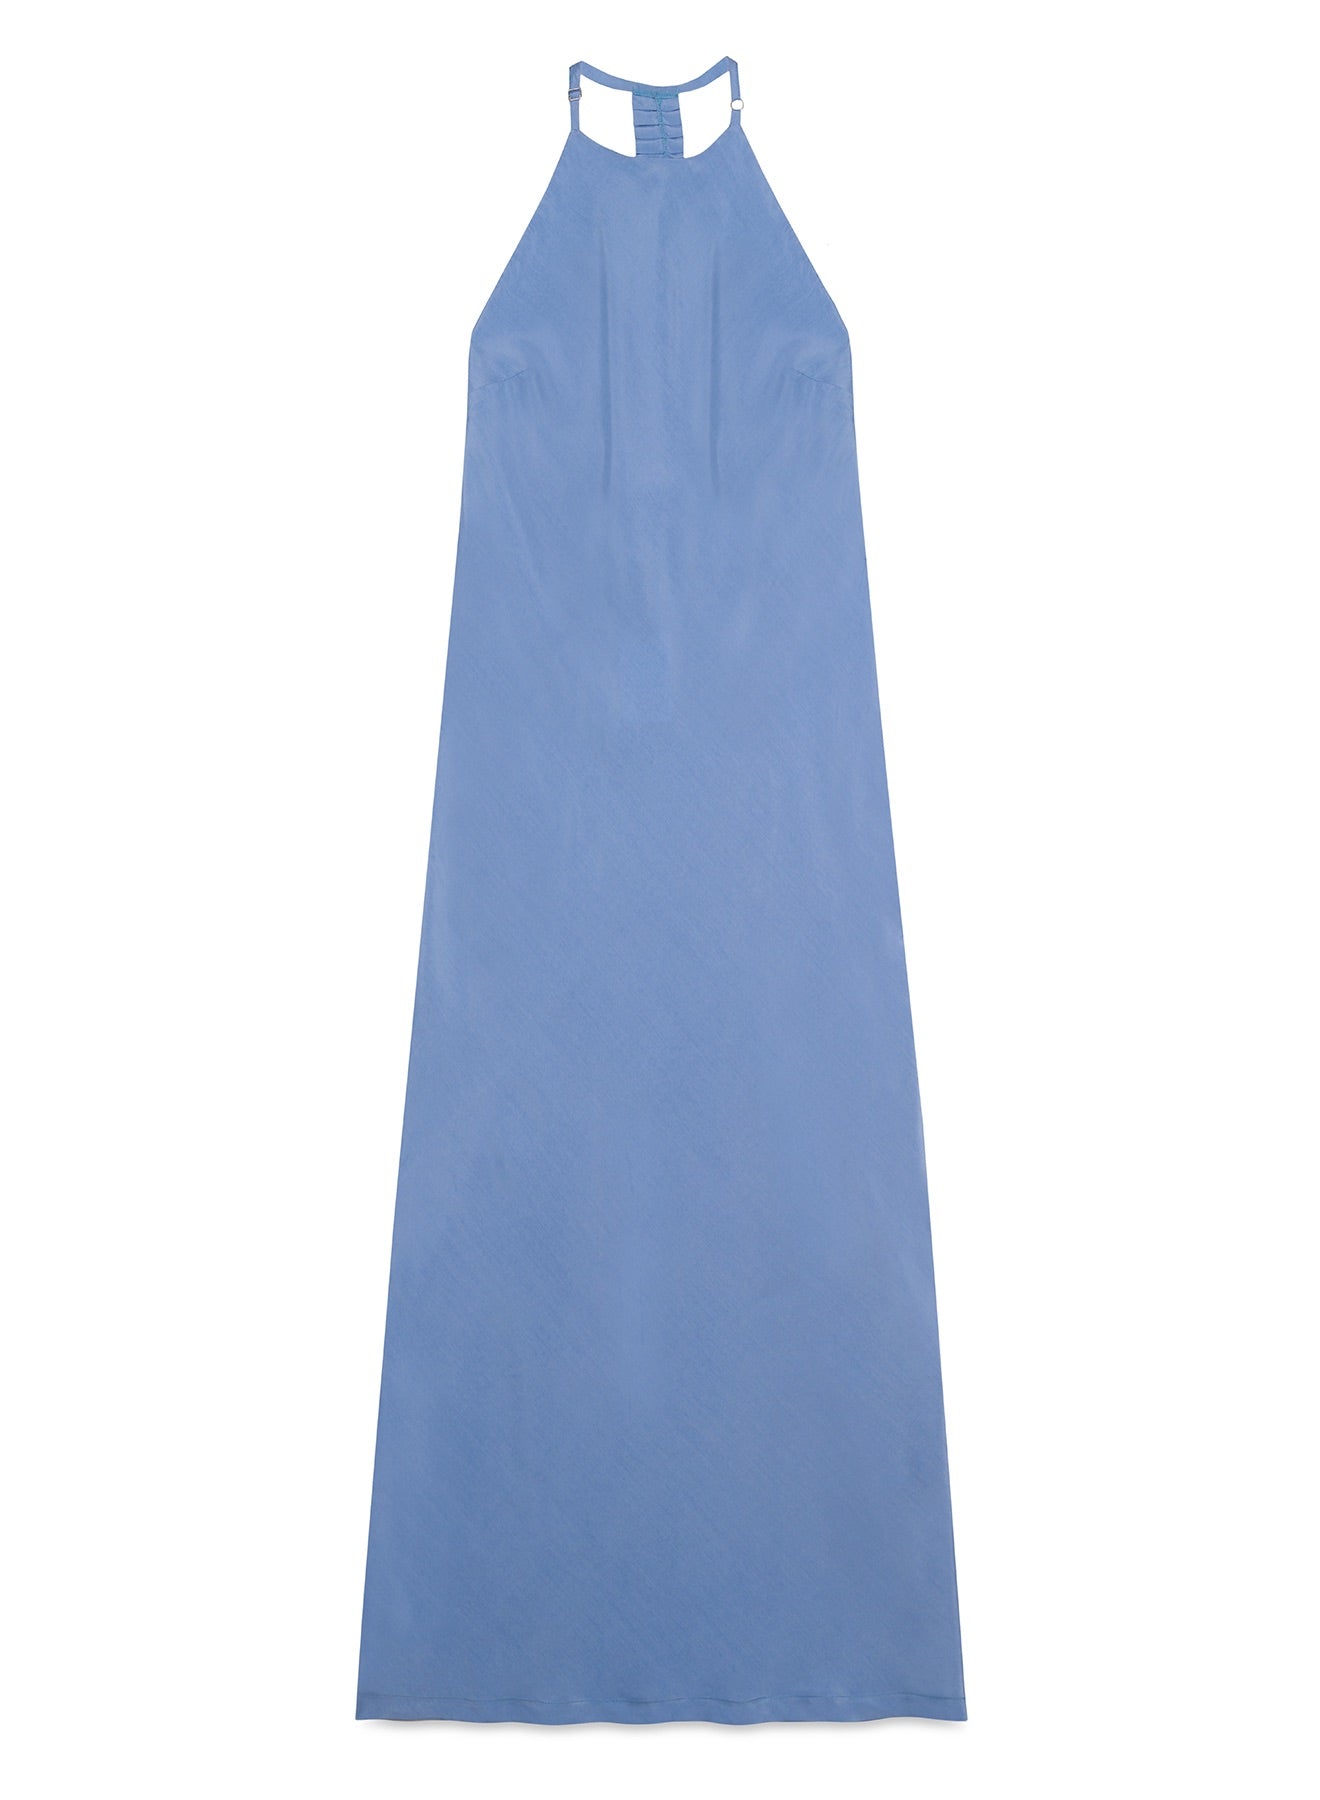 Viscose Light Blue Dress